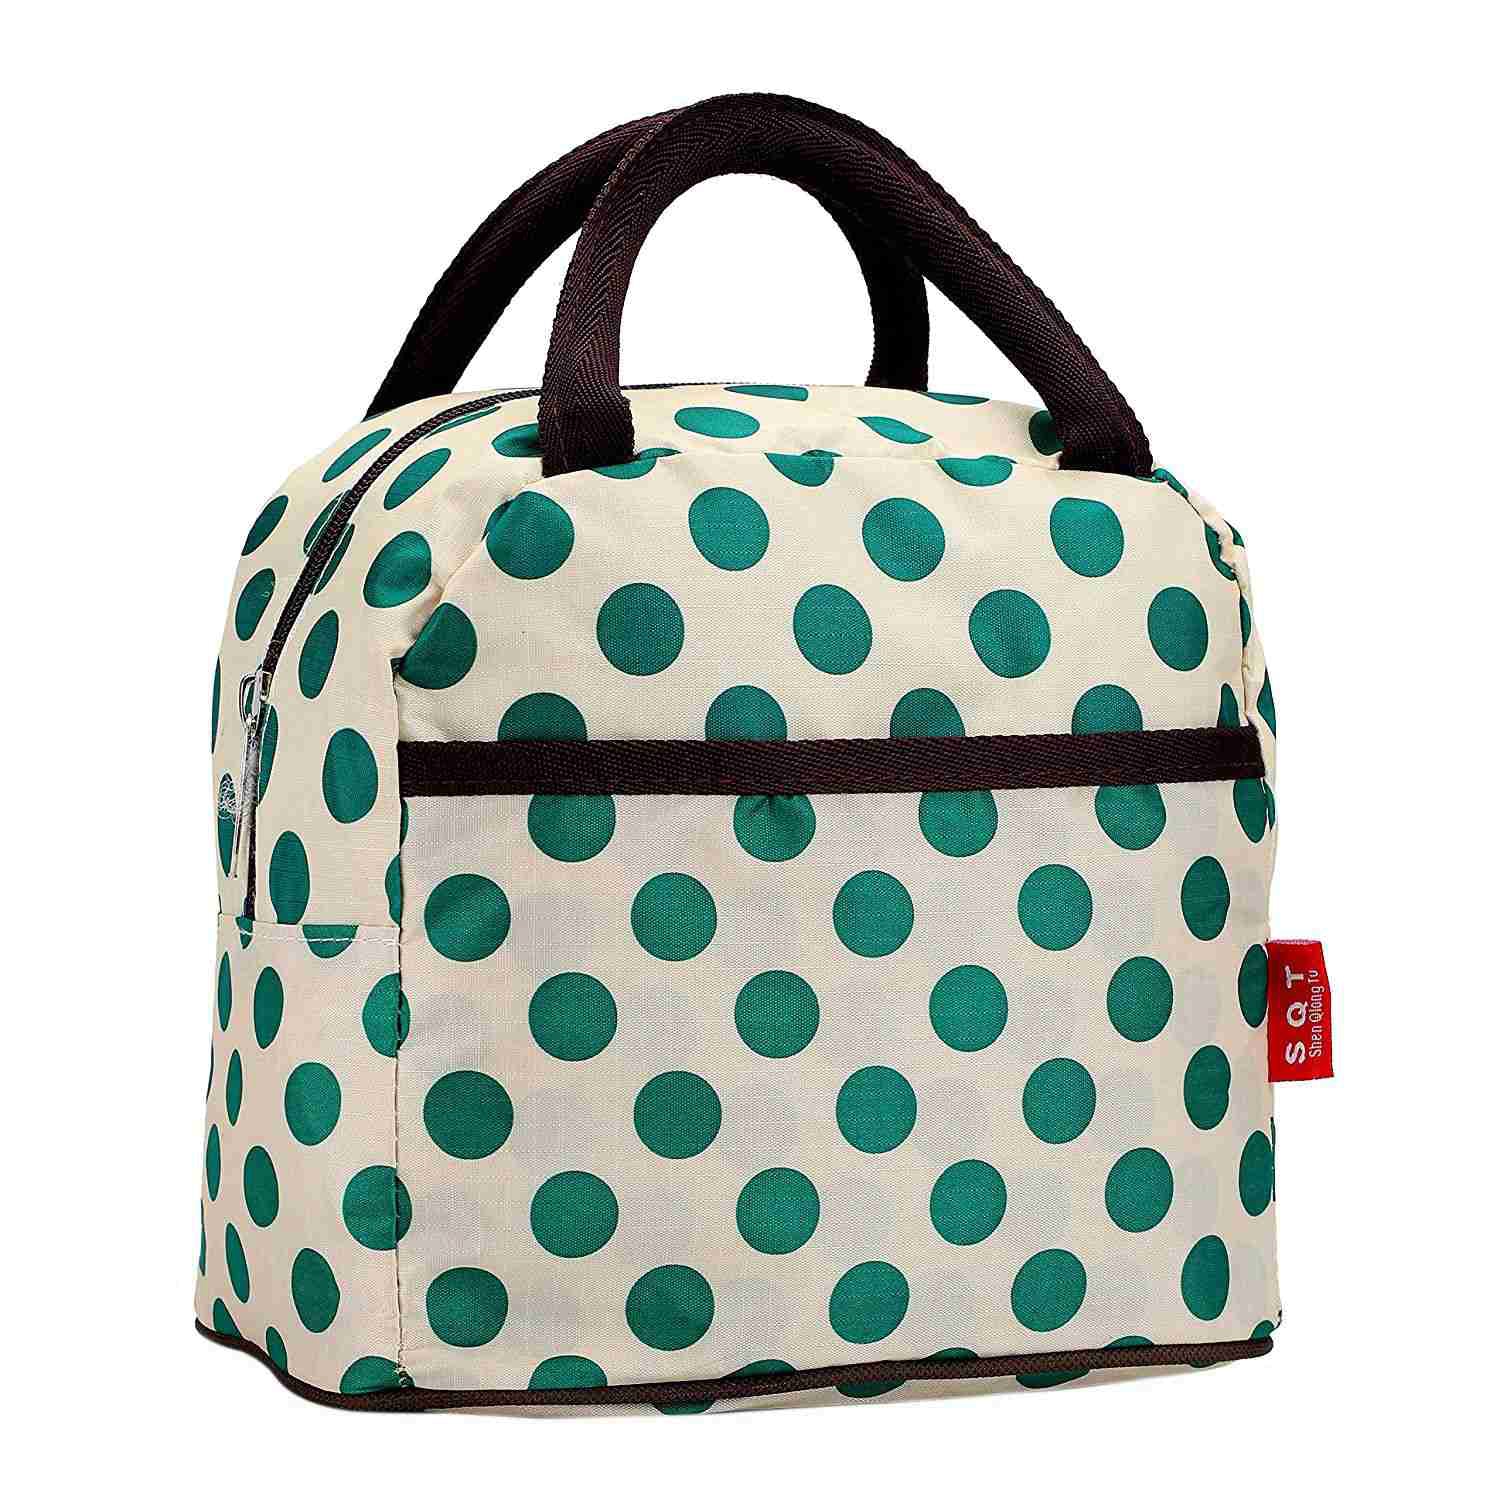 Fashion Lunch Bag Tote for Women Work School green - ebowsos